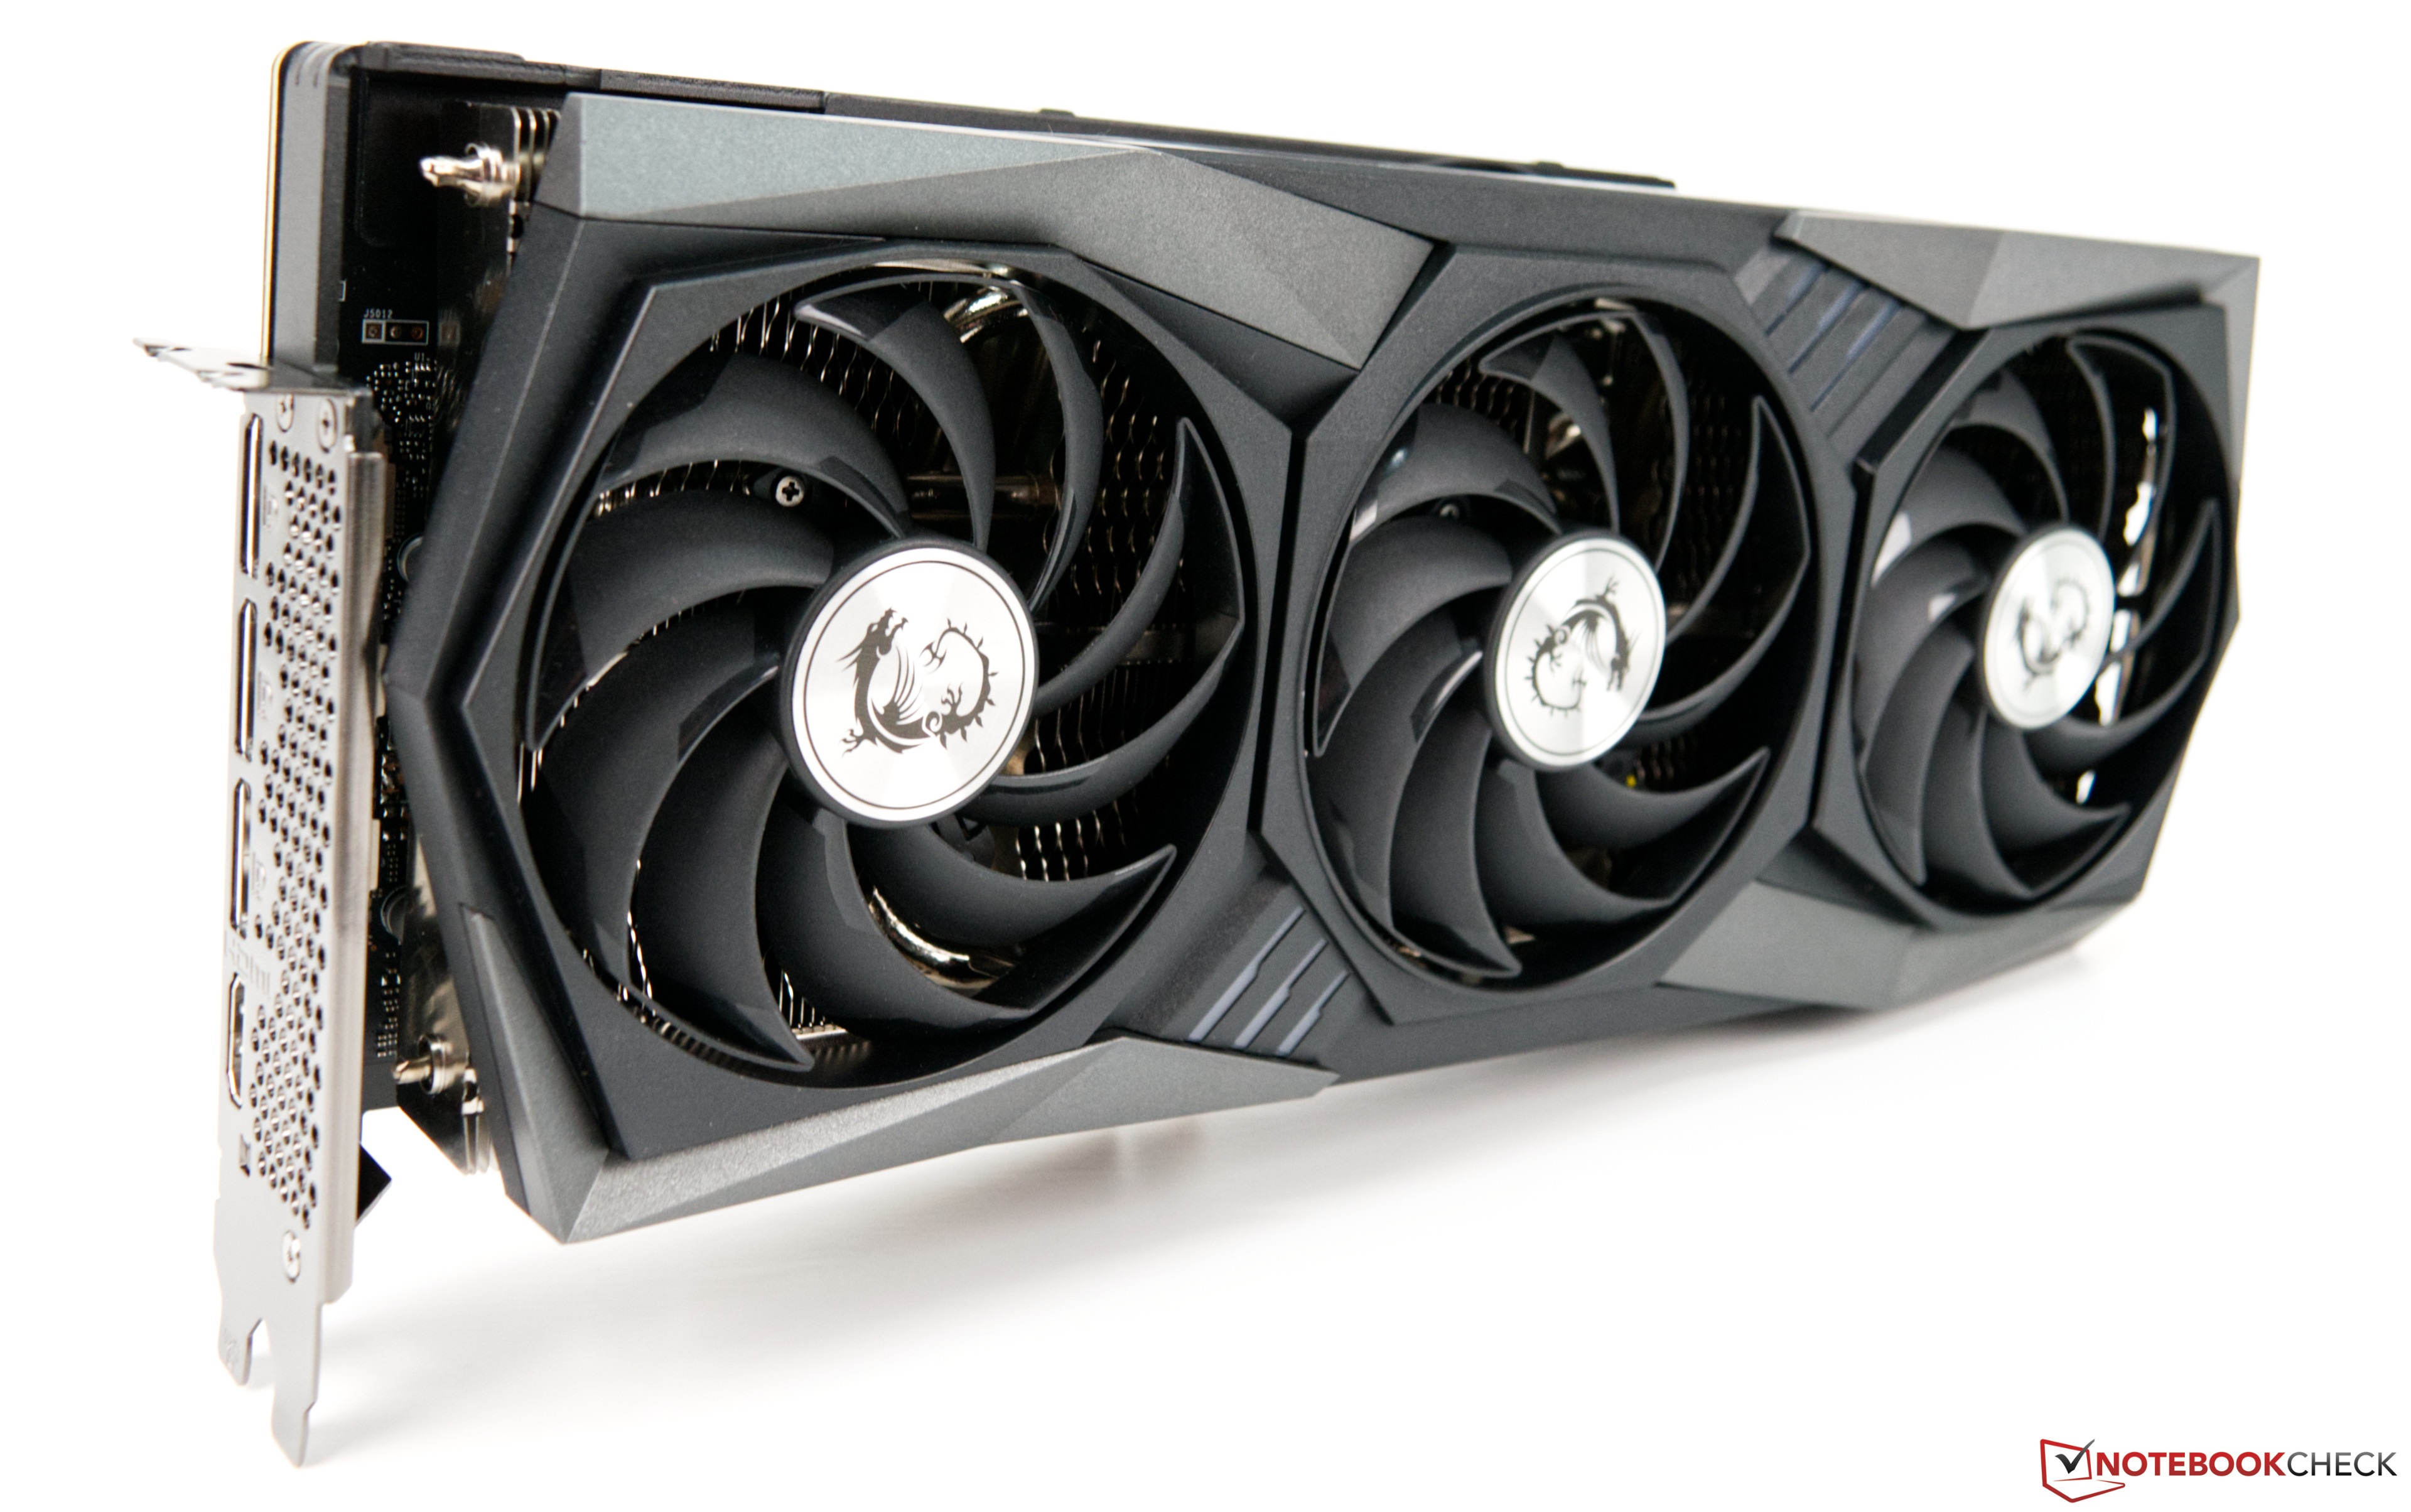 beundre dynasti Mainstream NVIDIA GeForce RTX 3070 GPU - Benchmarks and Specs - NotebookCheck.net Tech